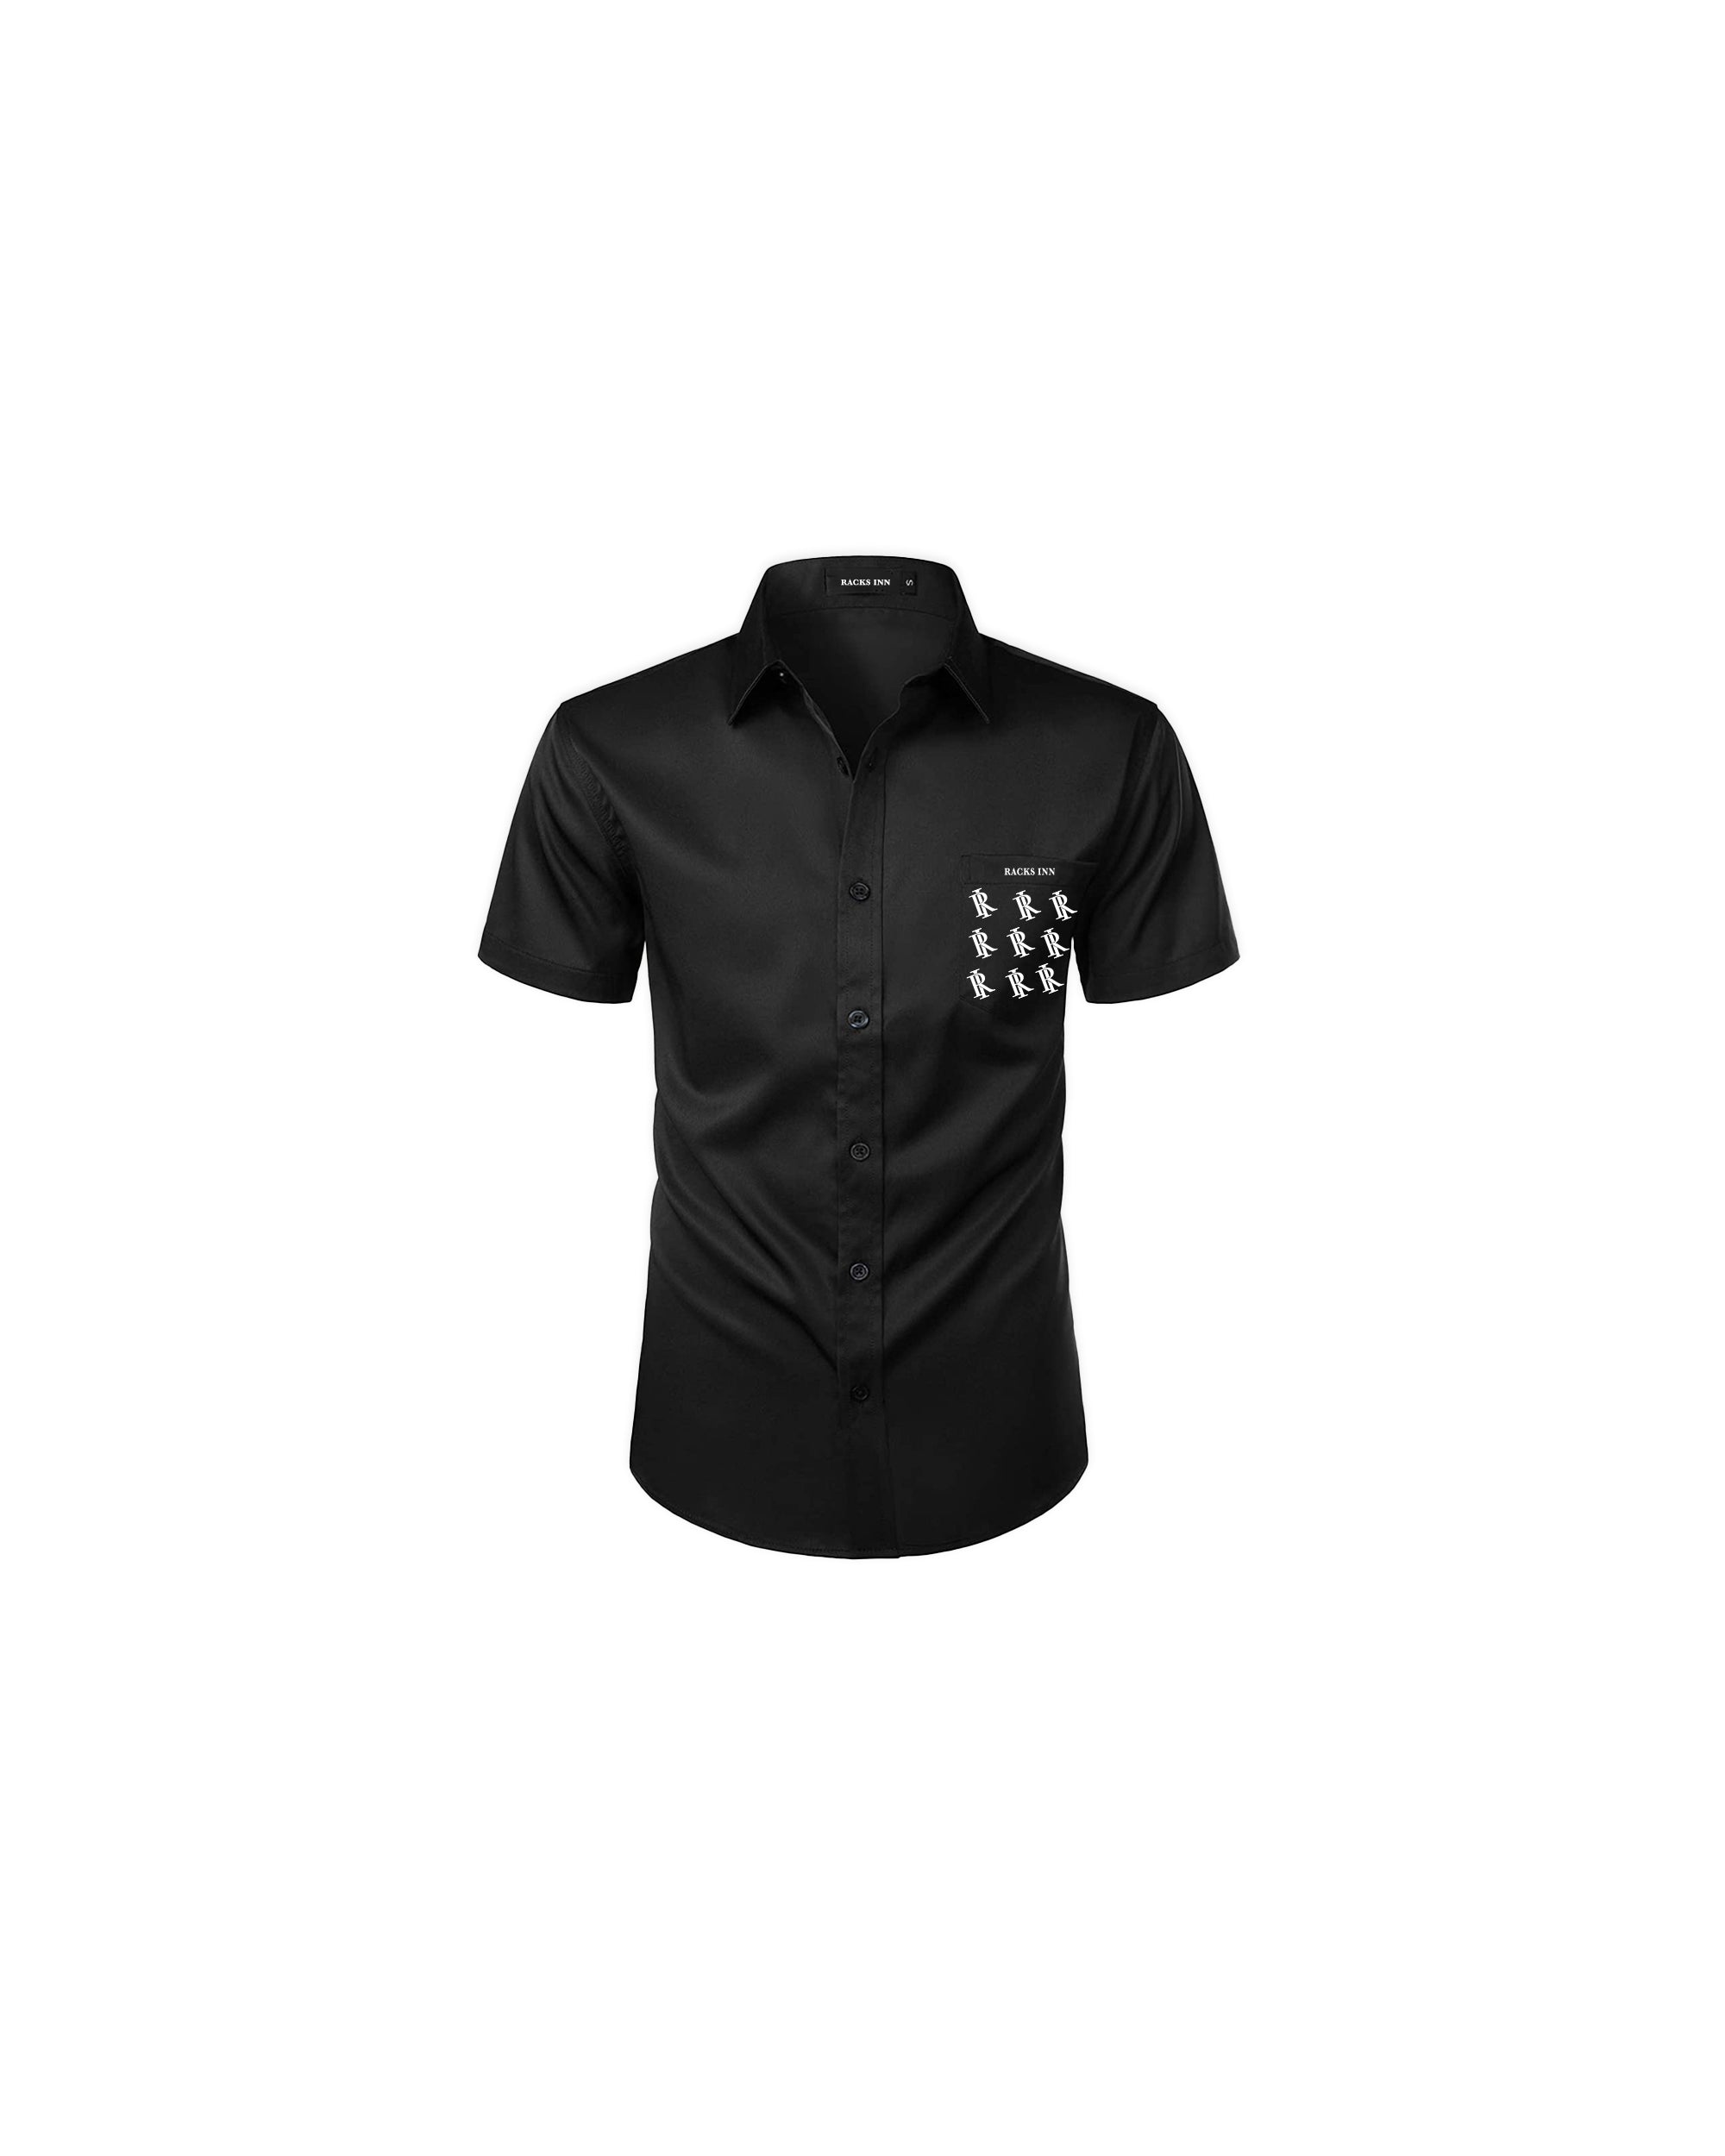 Monogram Graphic Casual Shirt - Black